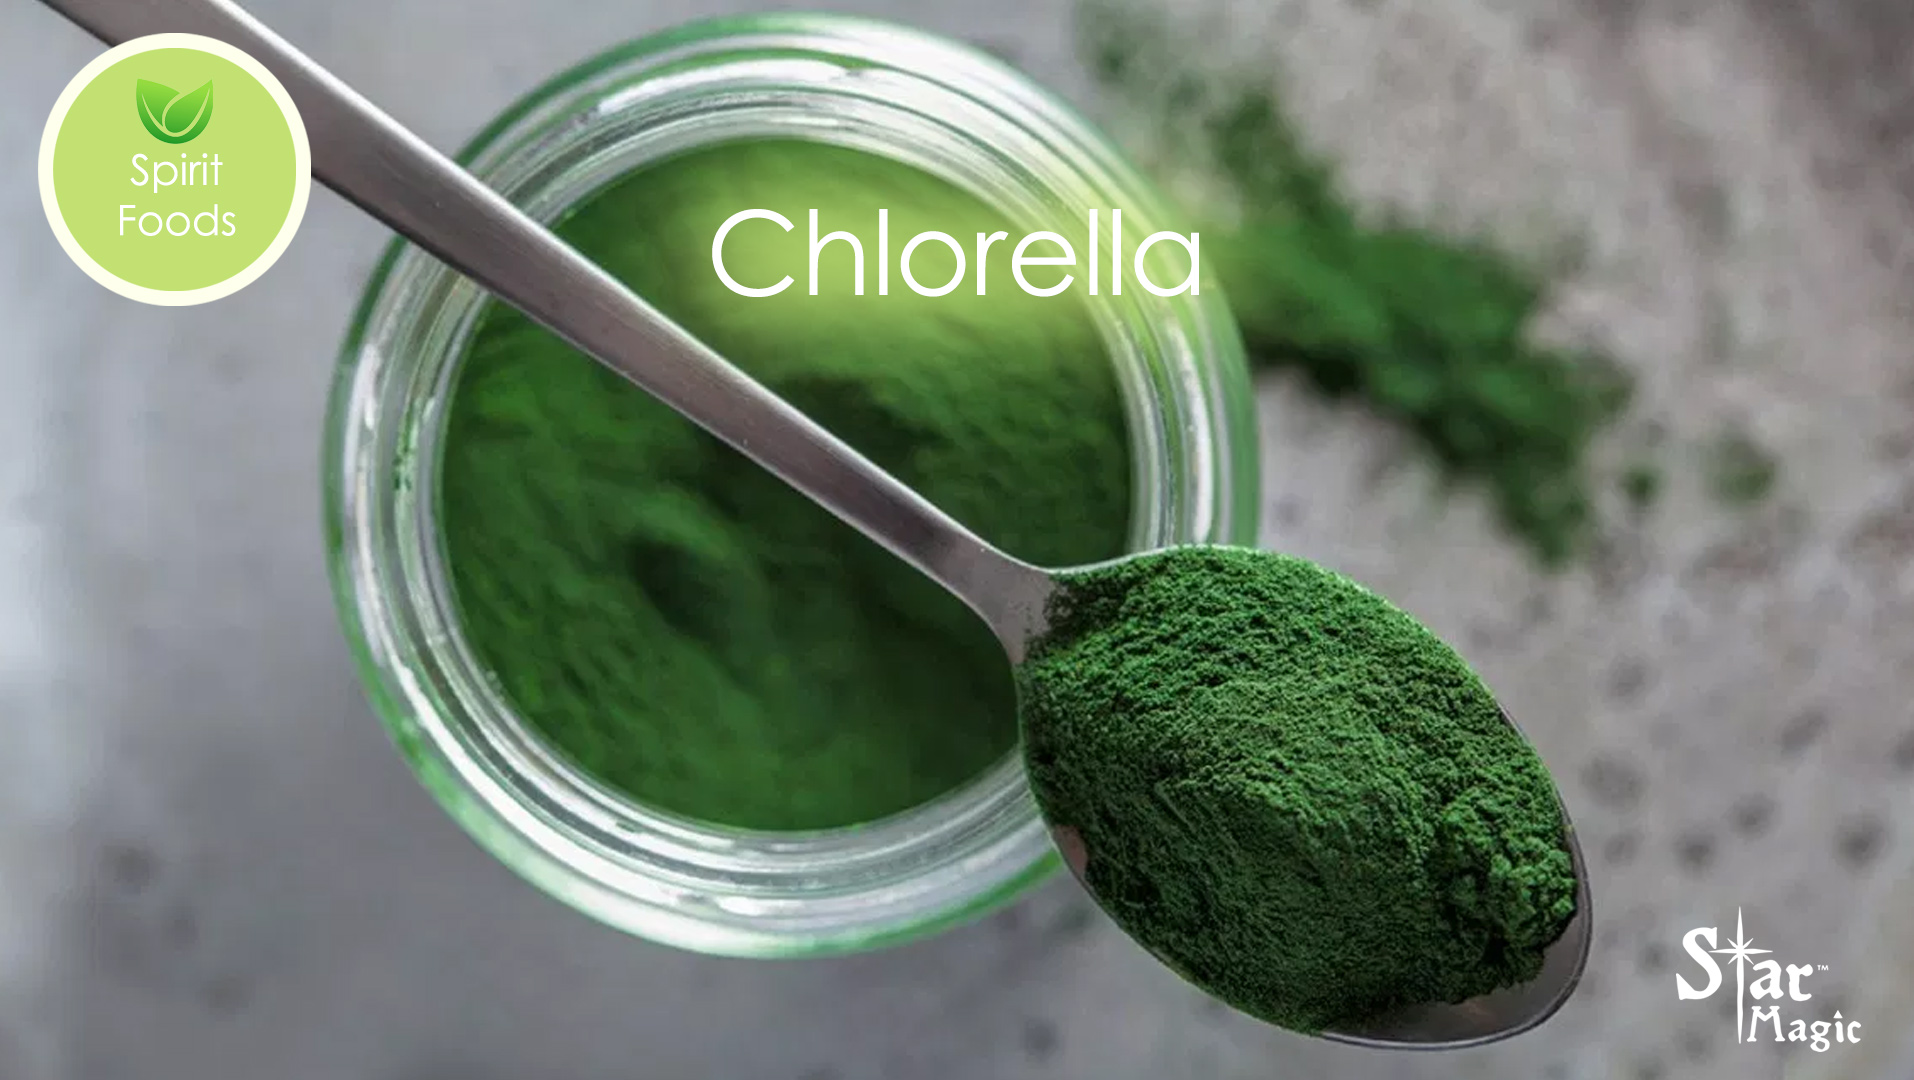 Spirit Food – Chlorella